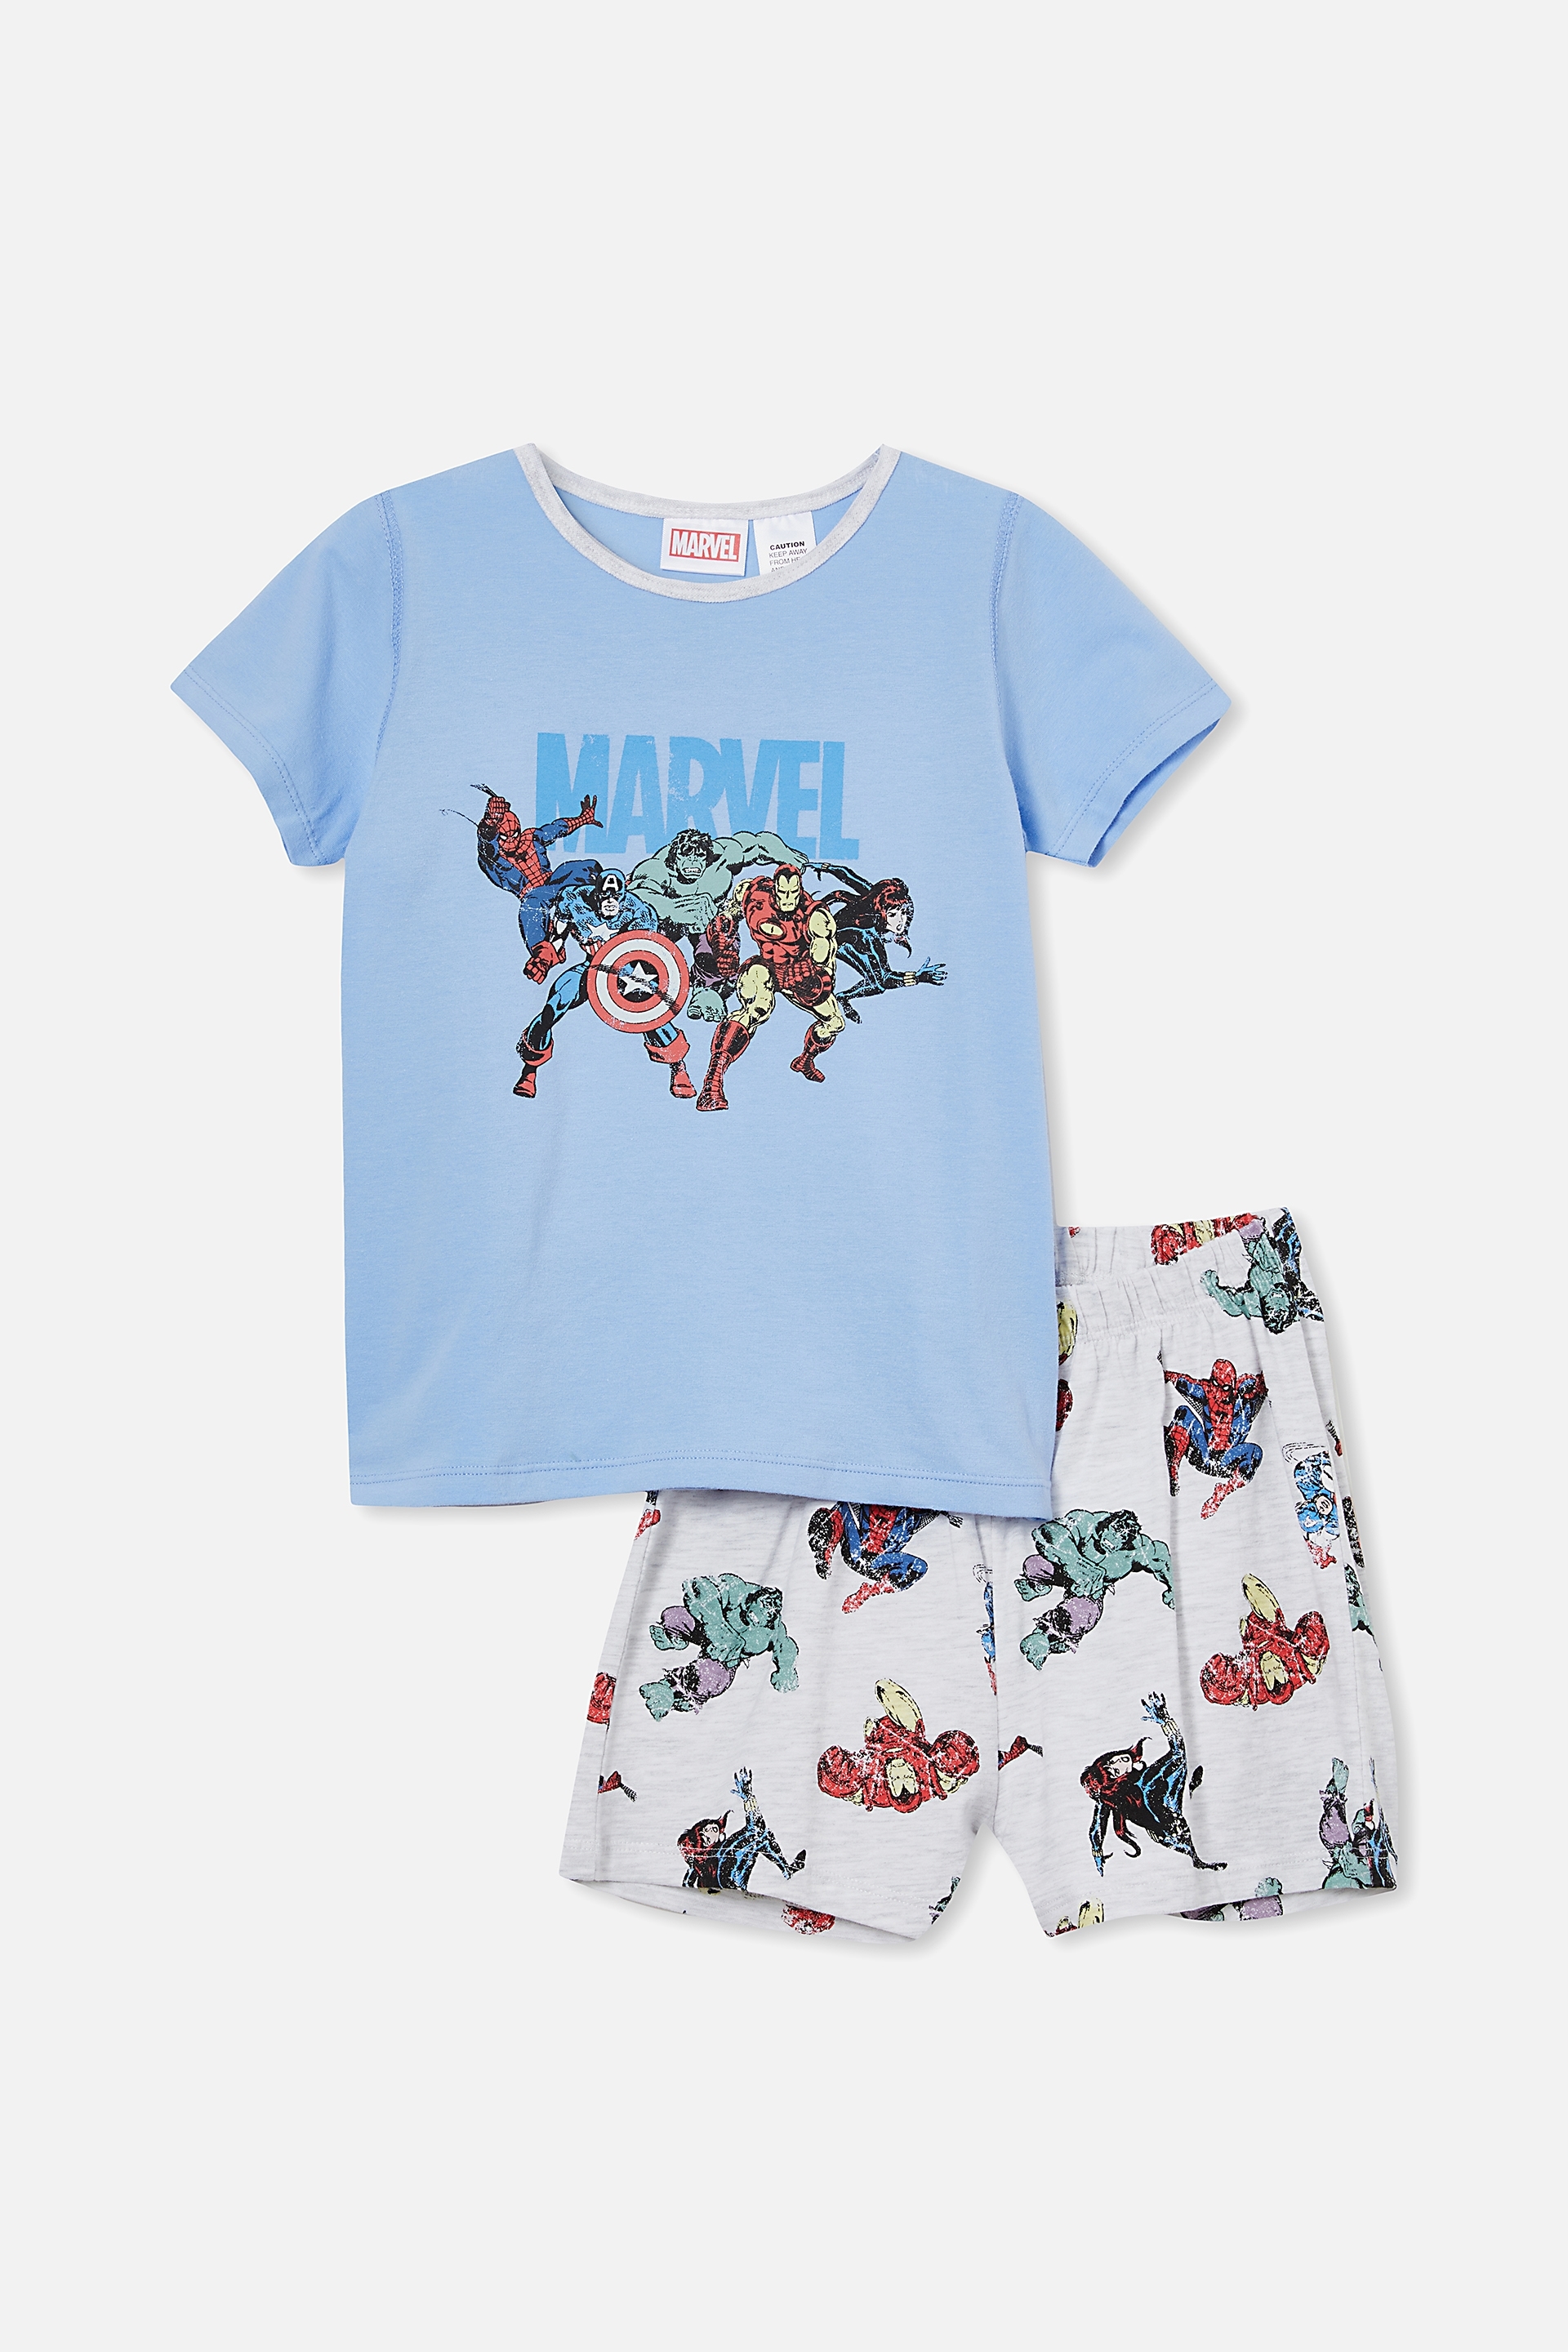 Cotton On Kids - Hudson Short Sleeve Pyjama Set Licensed - Lcn mar team marvel/dusk blue